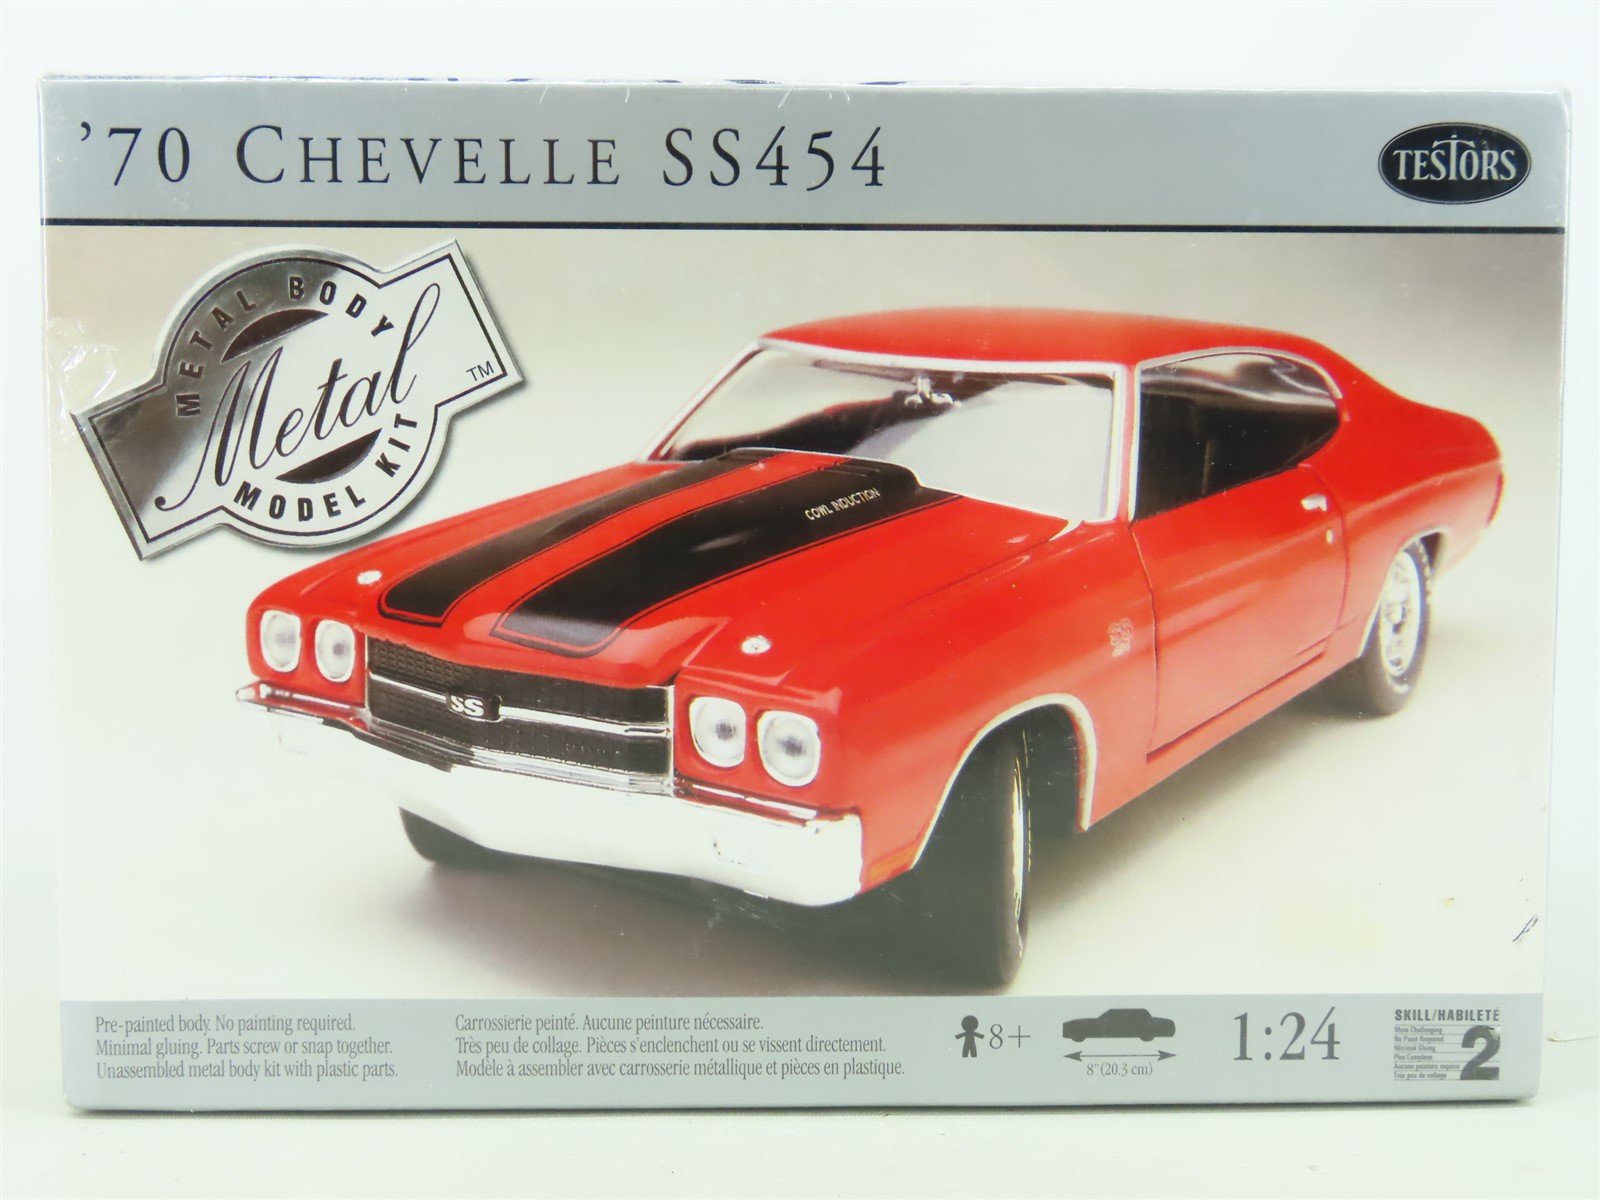 1:24 Scale Testors Metal Model Car Kit #197 '70 Chevelle SS454 - SEALED